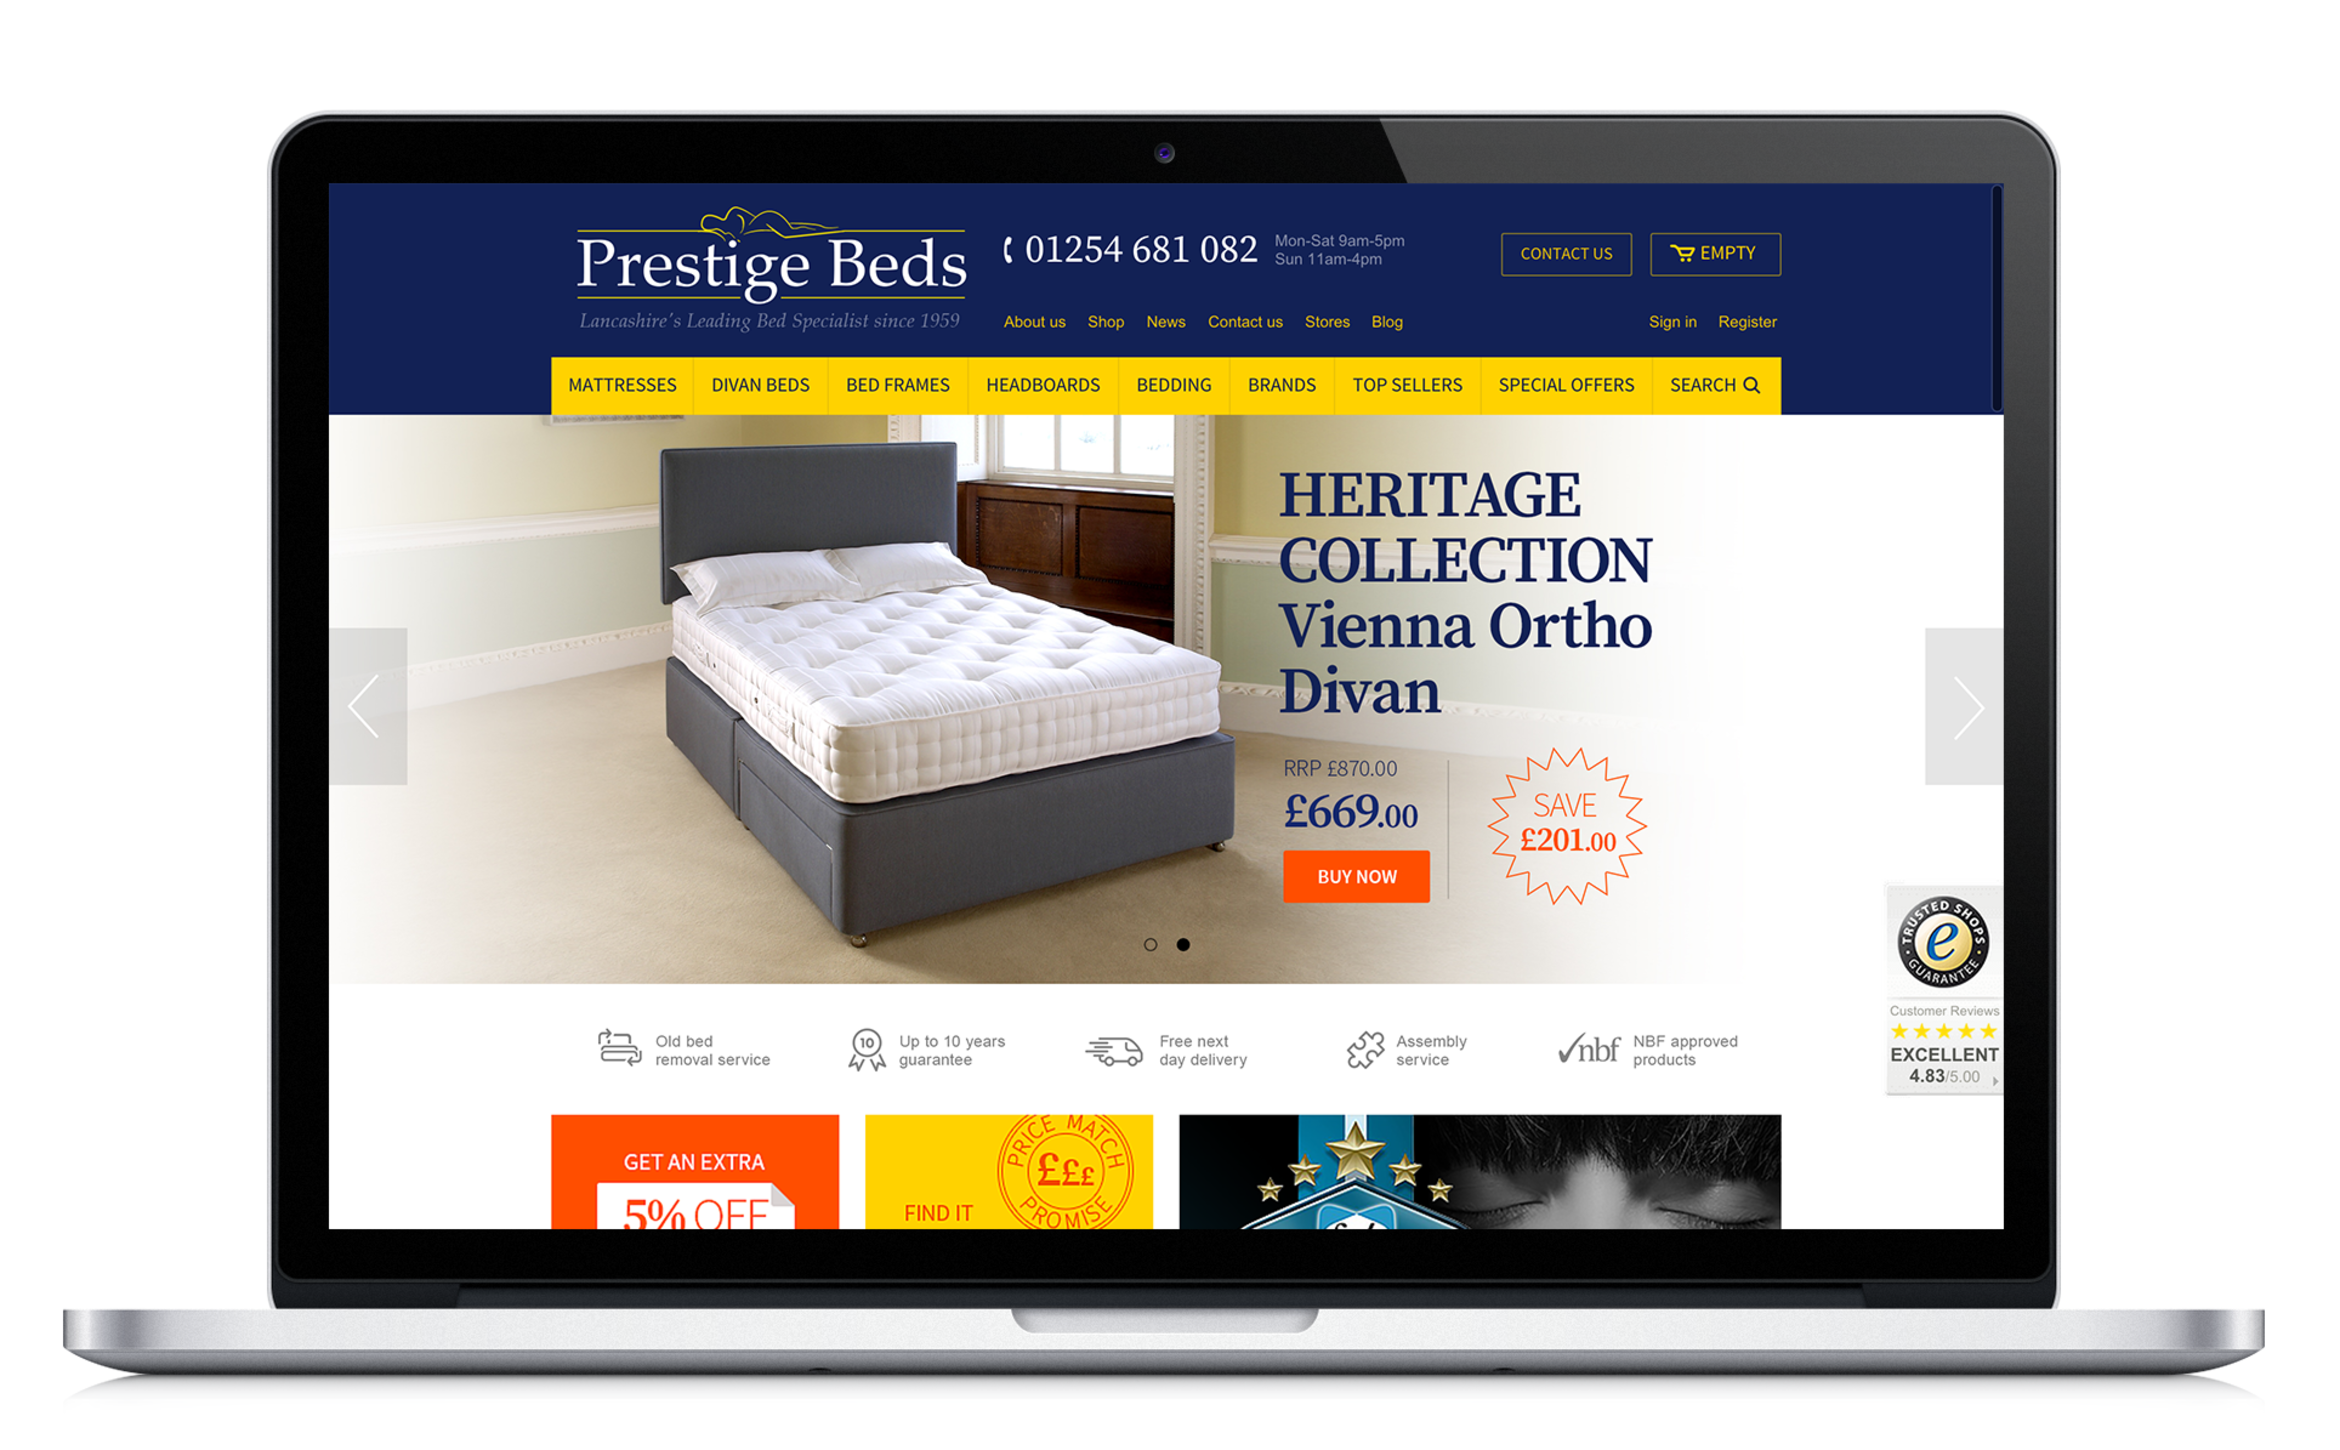 Prestige Beds